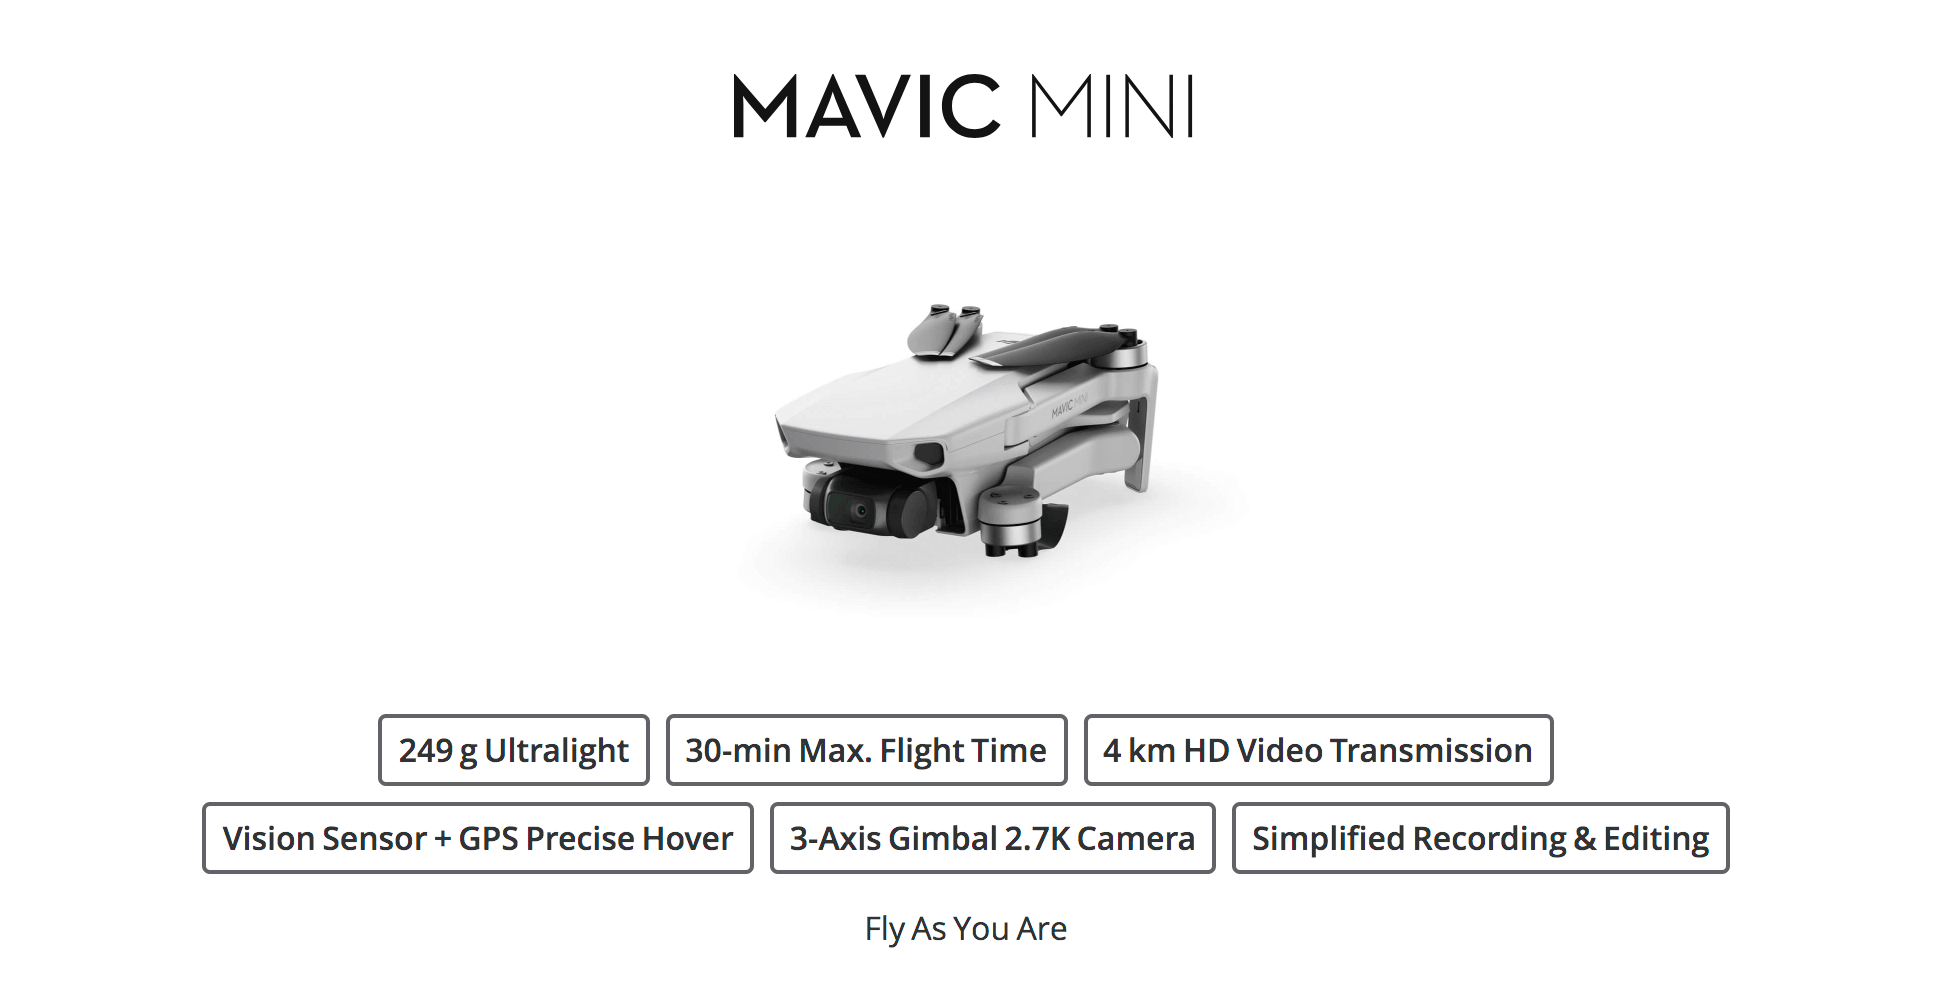 Mavic Mini - Specifications - DJI